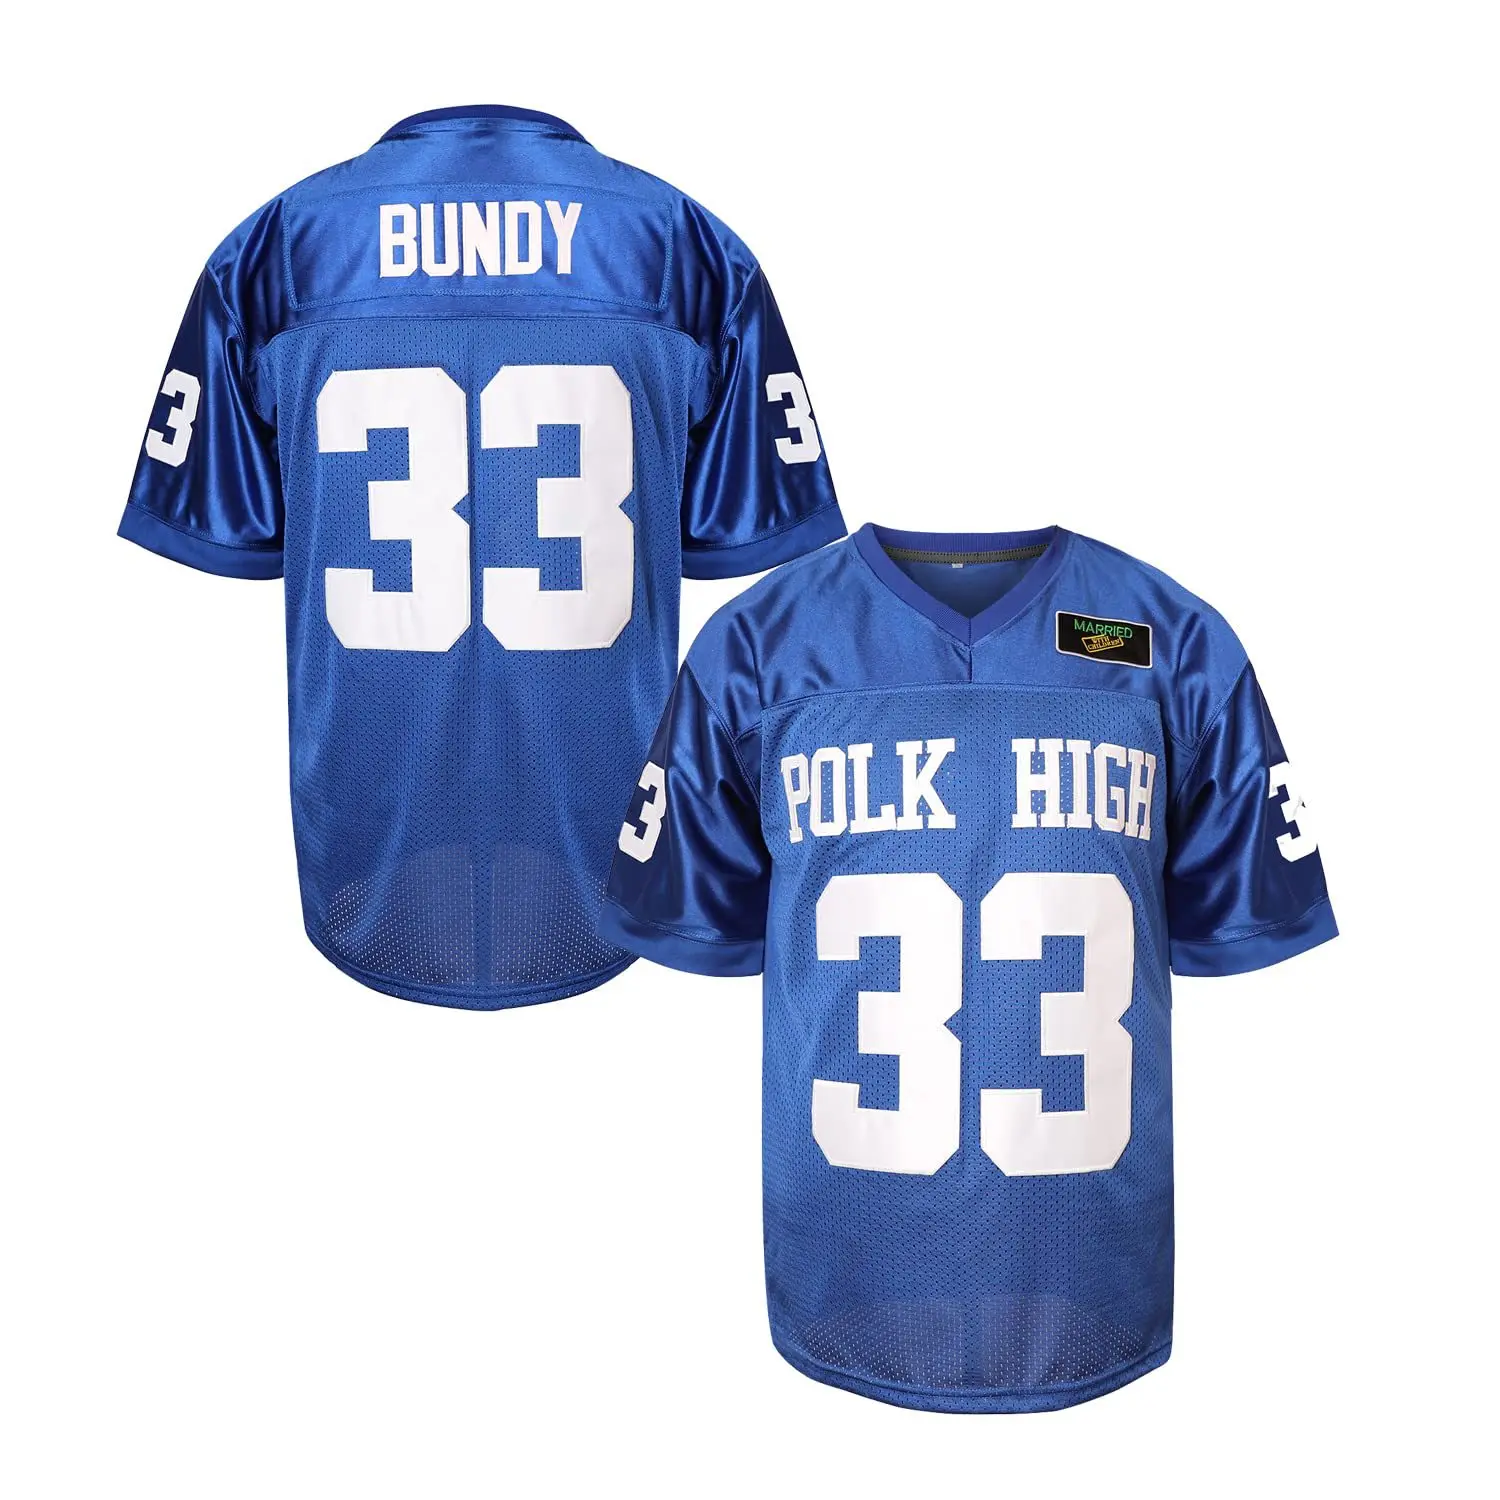 

Al Bundy #33 Polk High Movie Football Jersey Stitched Blue S-3XL High Quality